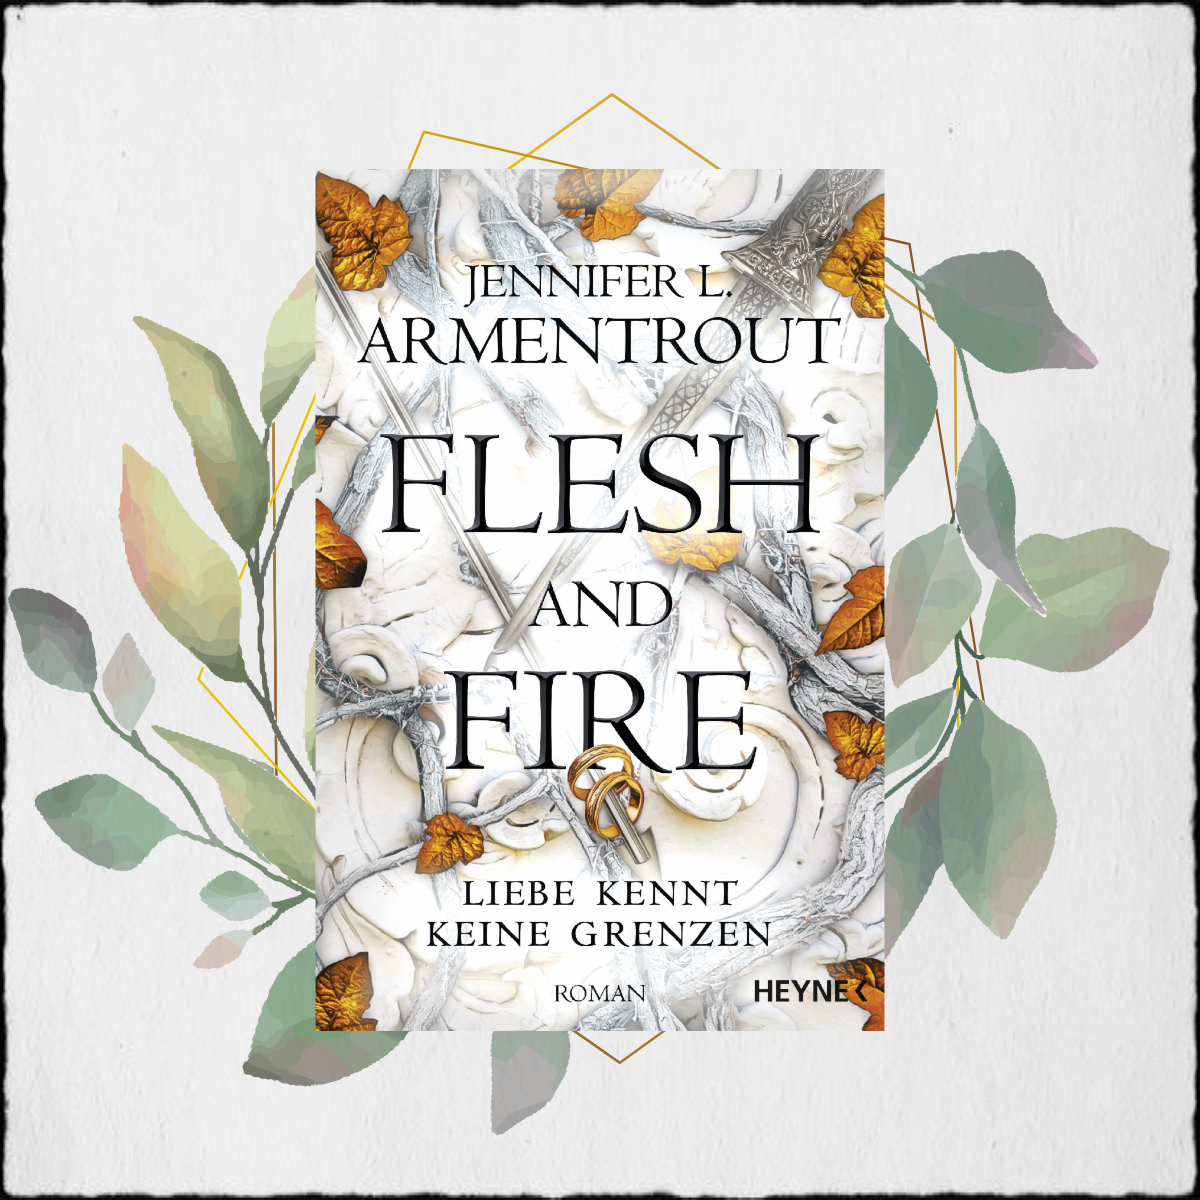 Jennifer L. Armentrout “Flesh & Fire – Liebe kennt keine Grenzen 2” ©2022 Heyne Verlag (Penguin Random House Verlagsgruppe GmbH)